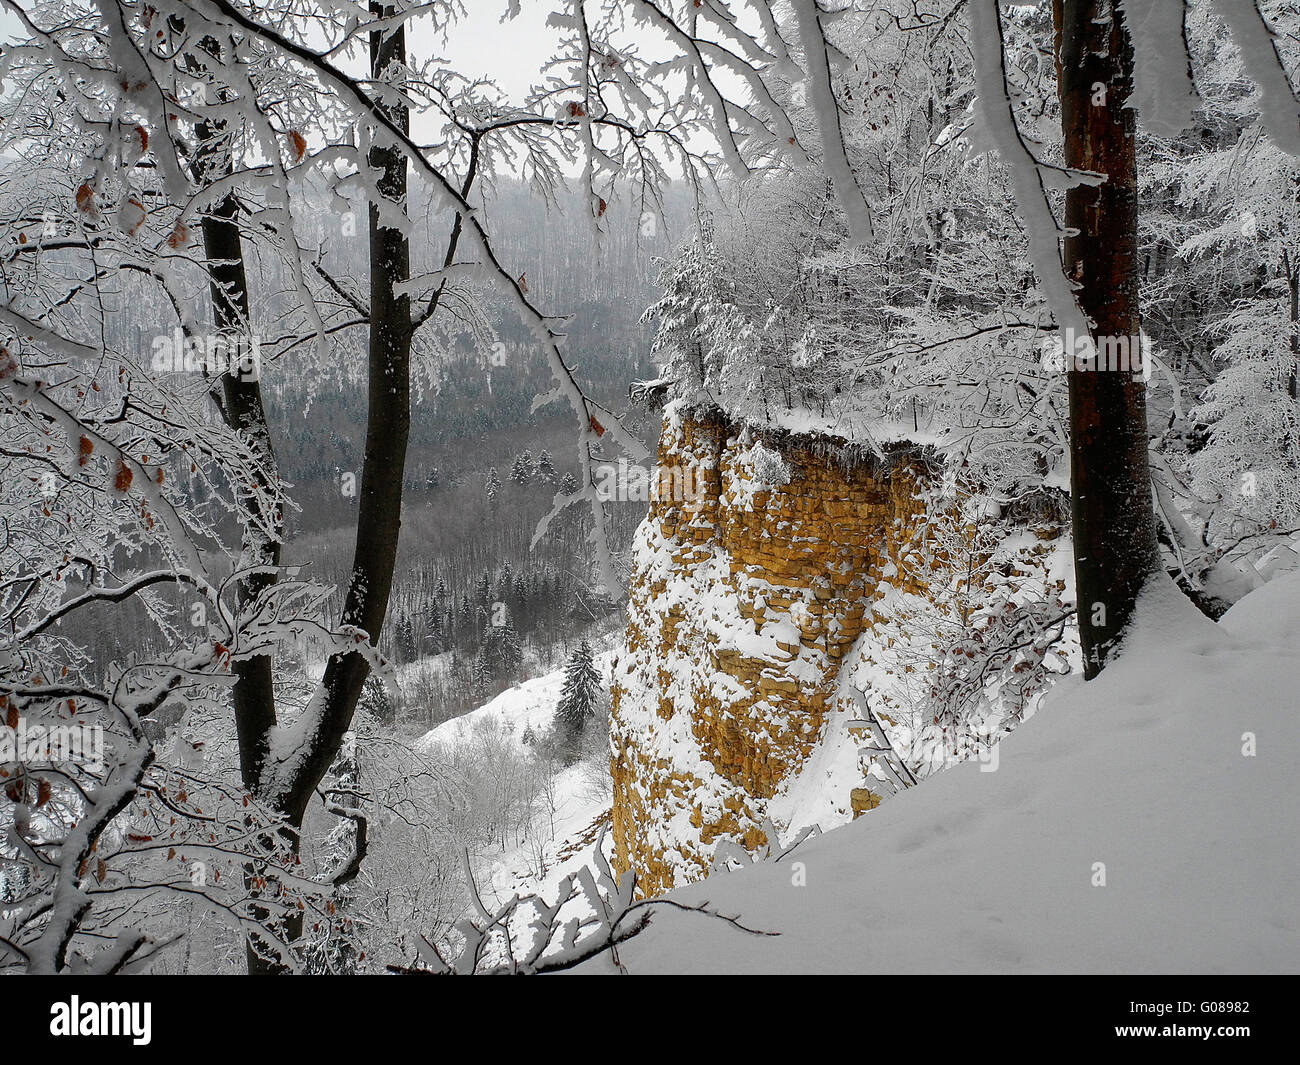 Landslide on the escarpment, swabian alb, germany Stock Photo